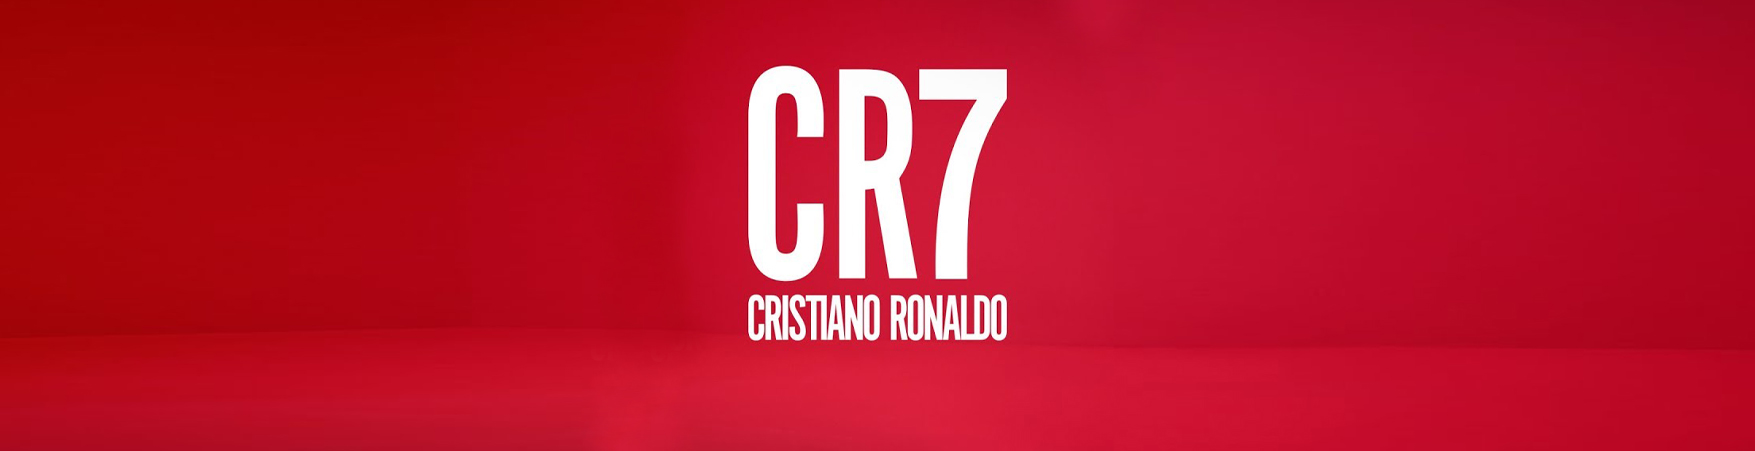 سي ار 7 كريستيانو رونالدو